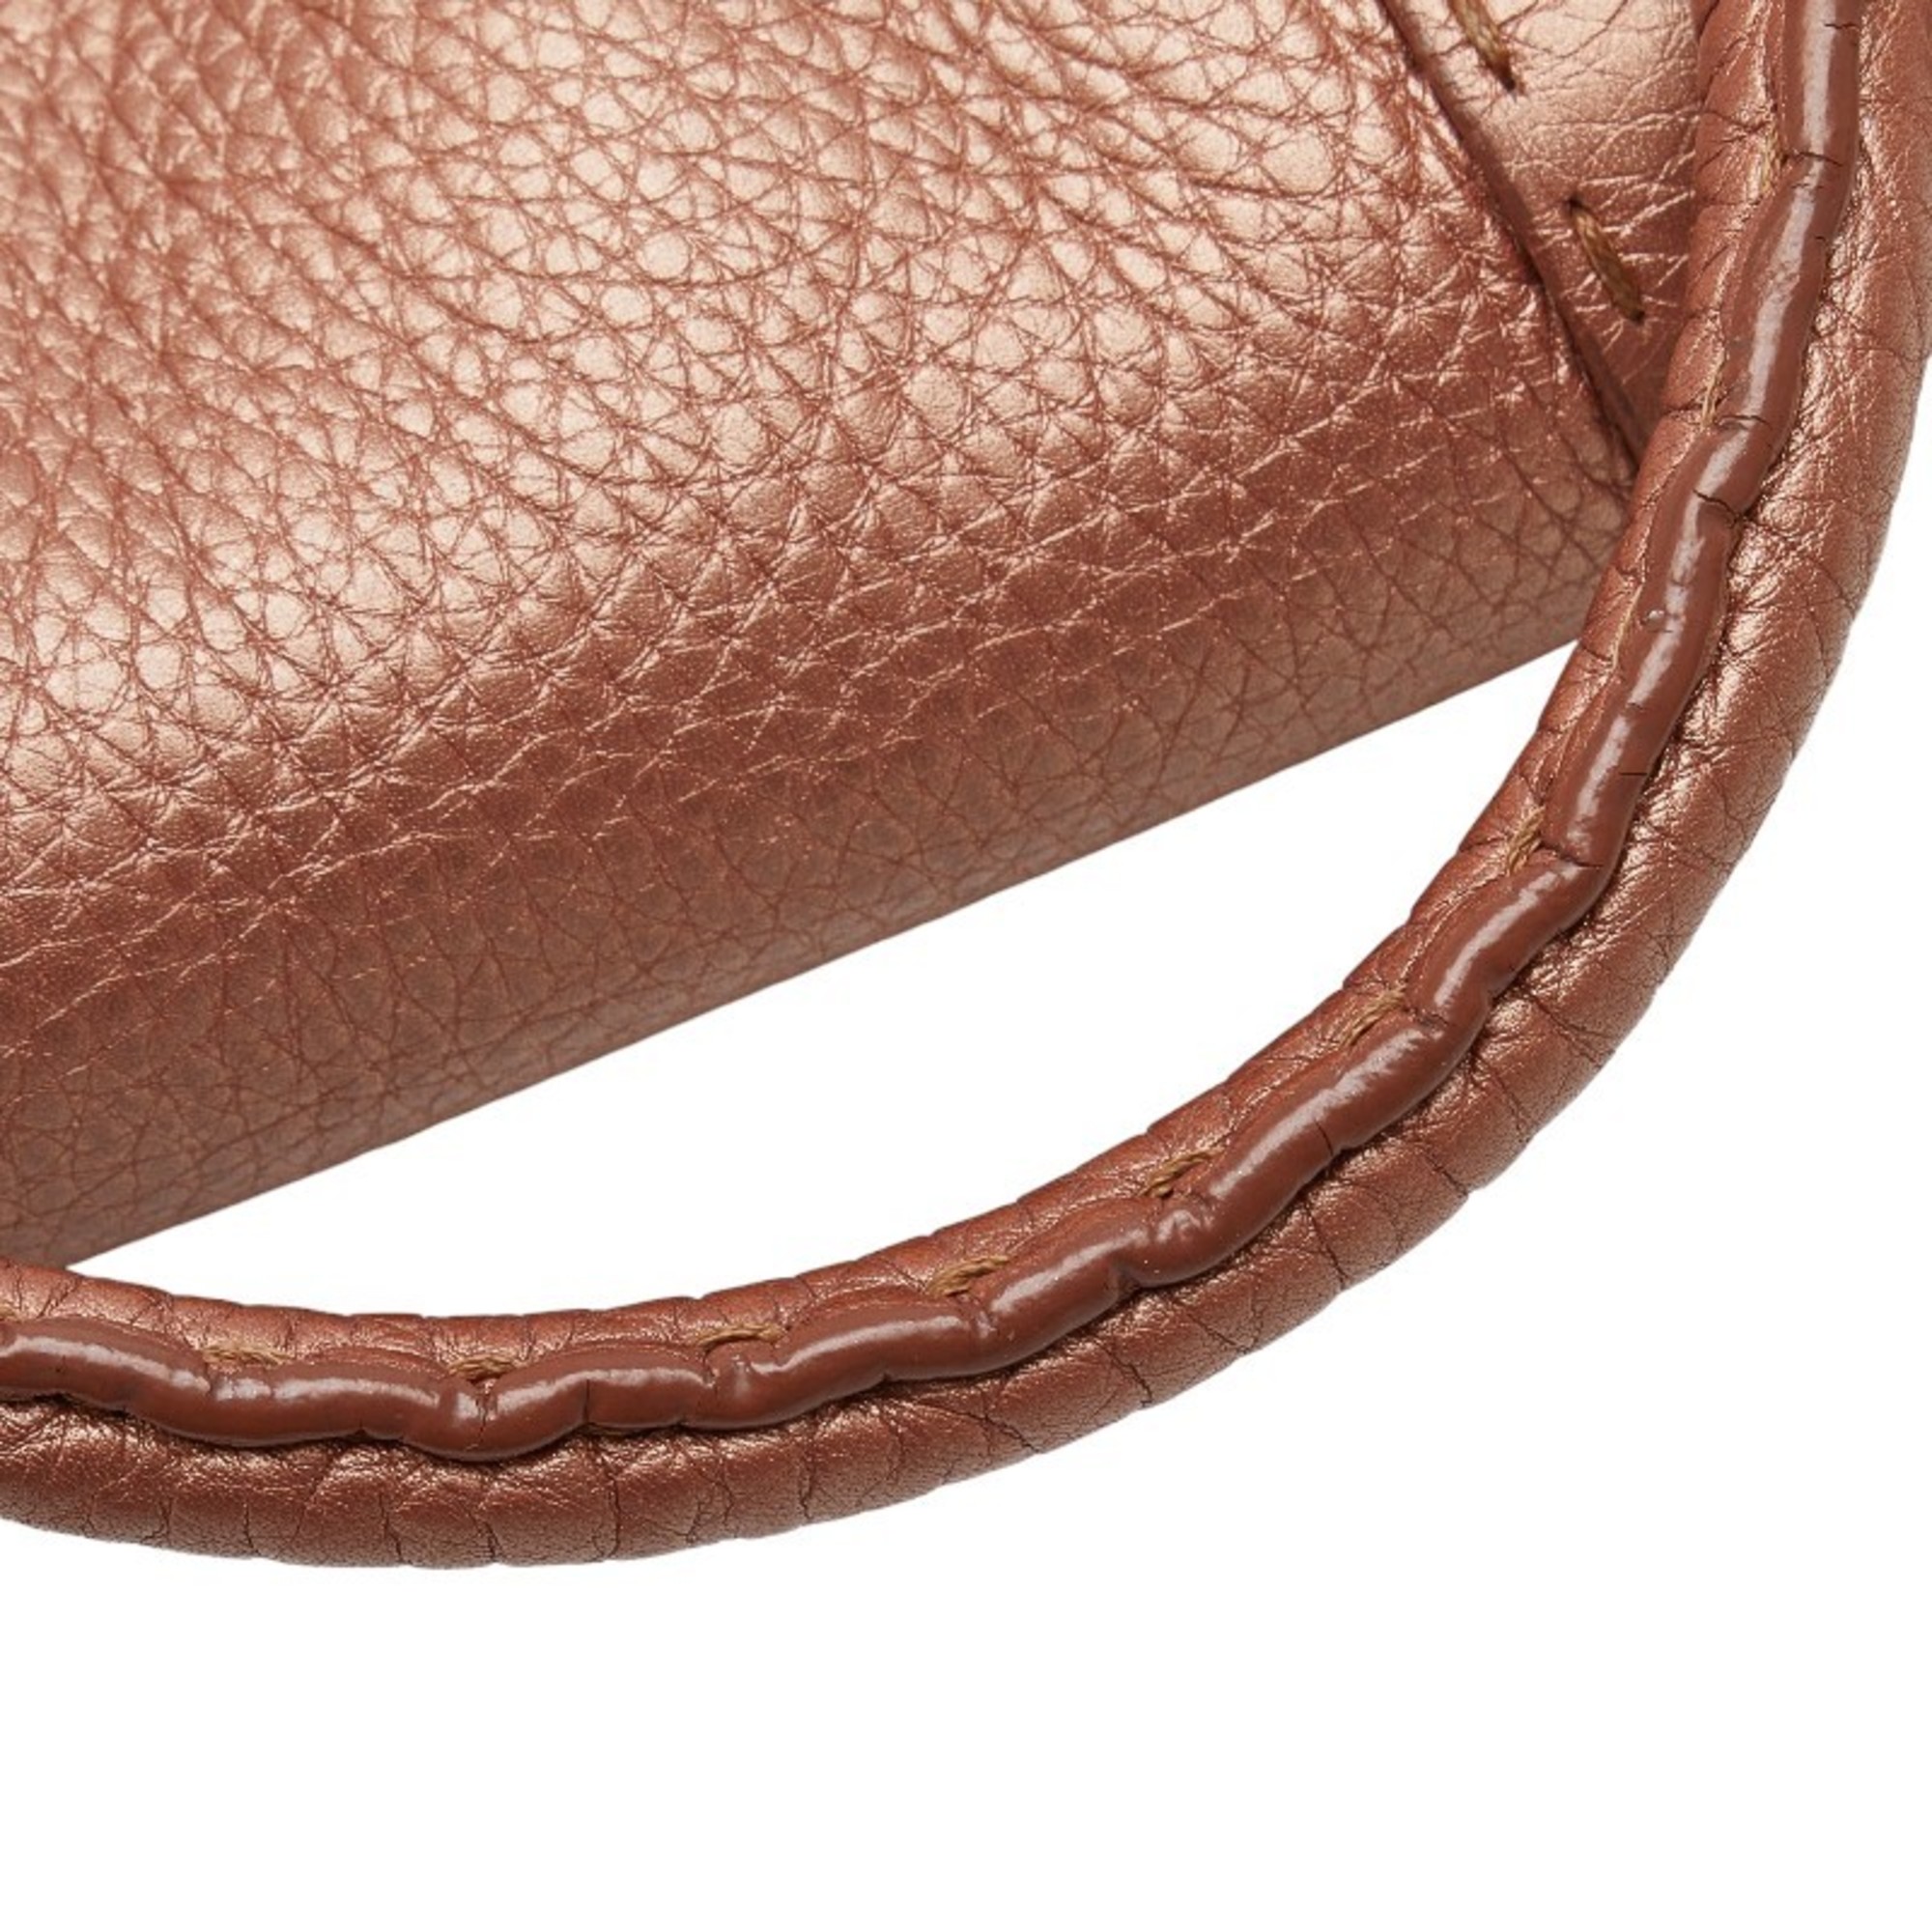 FENDI Selleria handbag pink gold leather women's